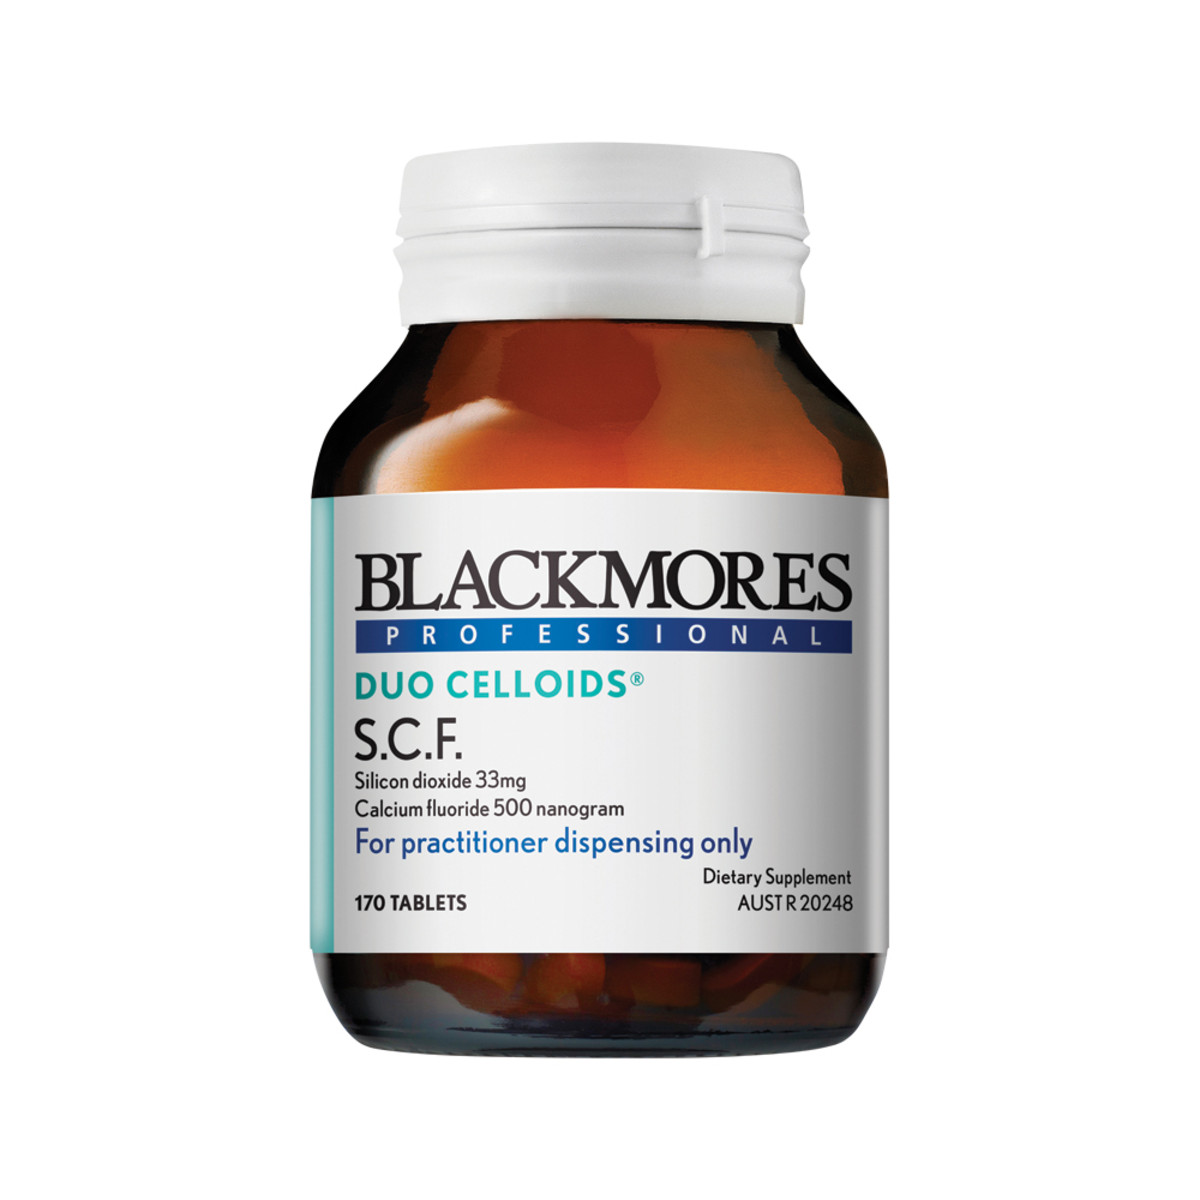 BLACKMORES PROFESSIONAL - SCF (Silicon dioxide & Calcium Flouride)